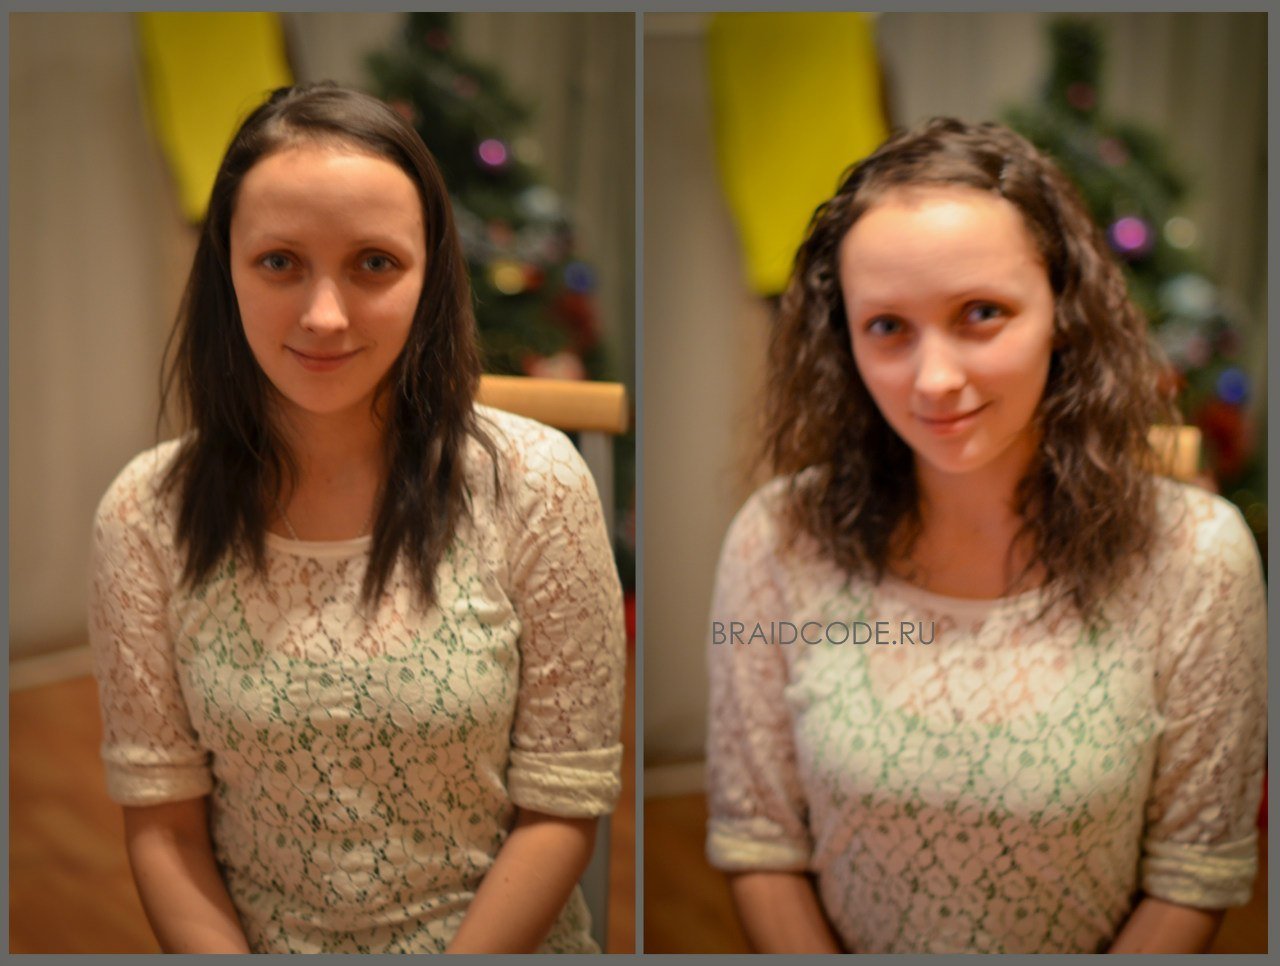 Химия на тонкие волосы фото до и после фото